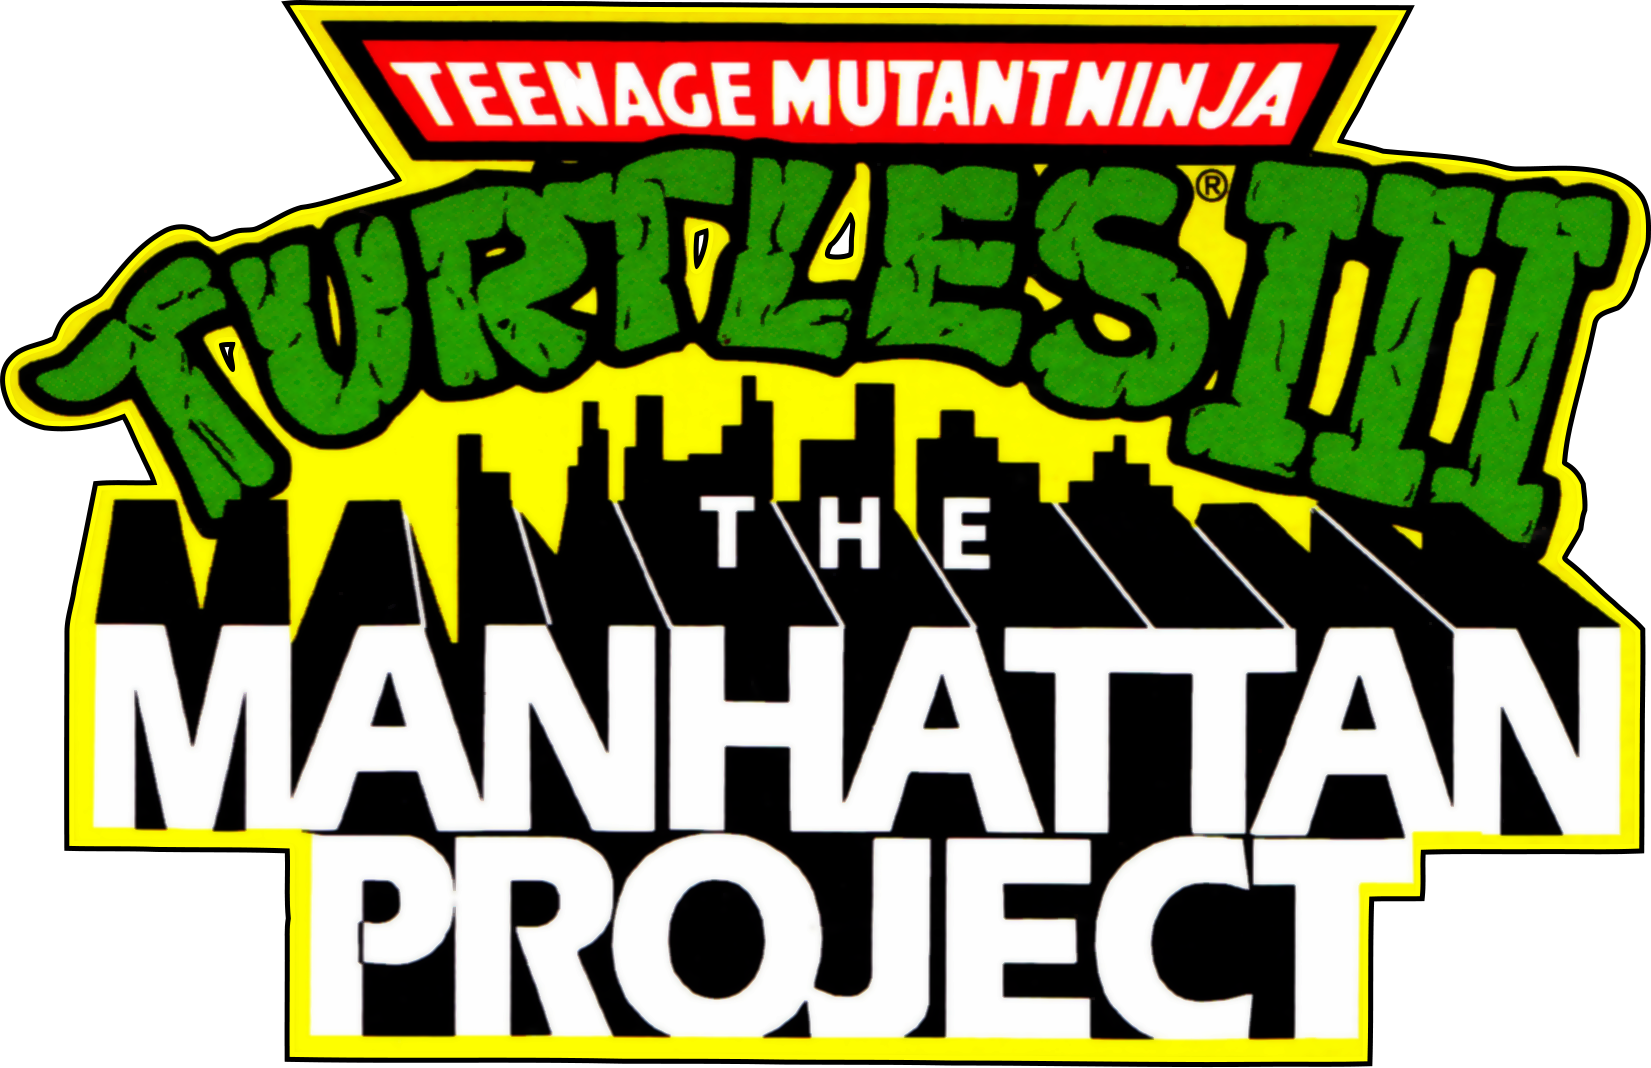 TMNT 3 the Manhattan Project NES. TMNT 3 Manhattan Project. Teenage Mutant Ninja Turtles Manhattan Project. Teenage Mutant Ninja Turtles 3 the Manhattan Project. Tmnt 3 nes